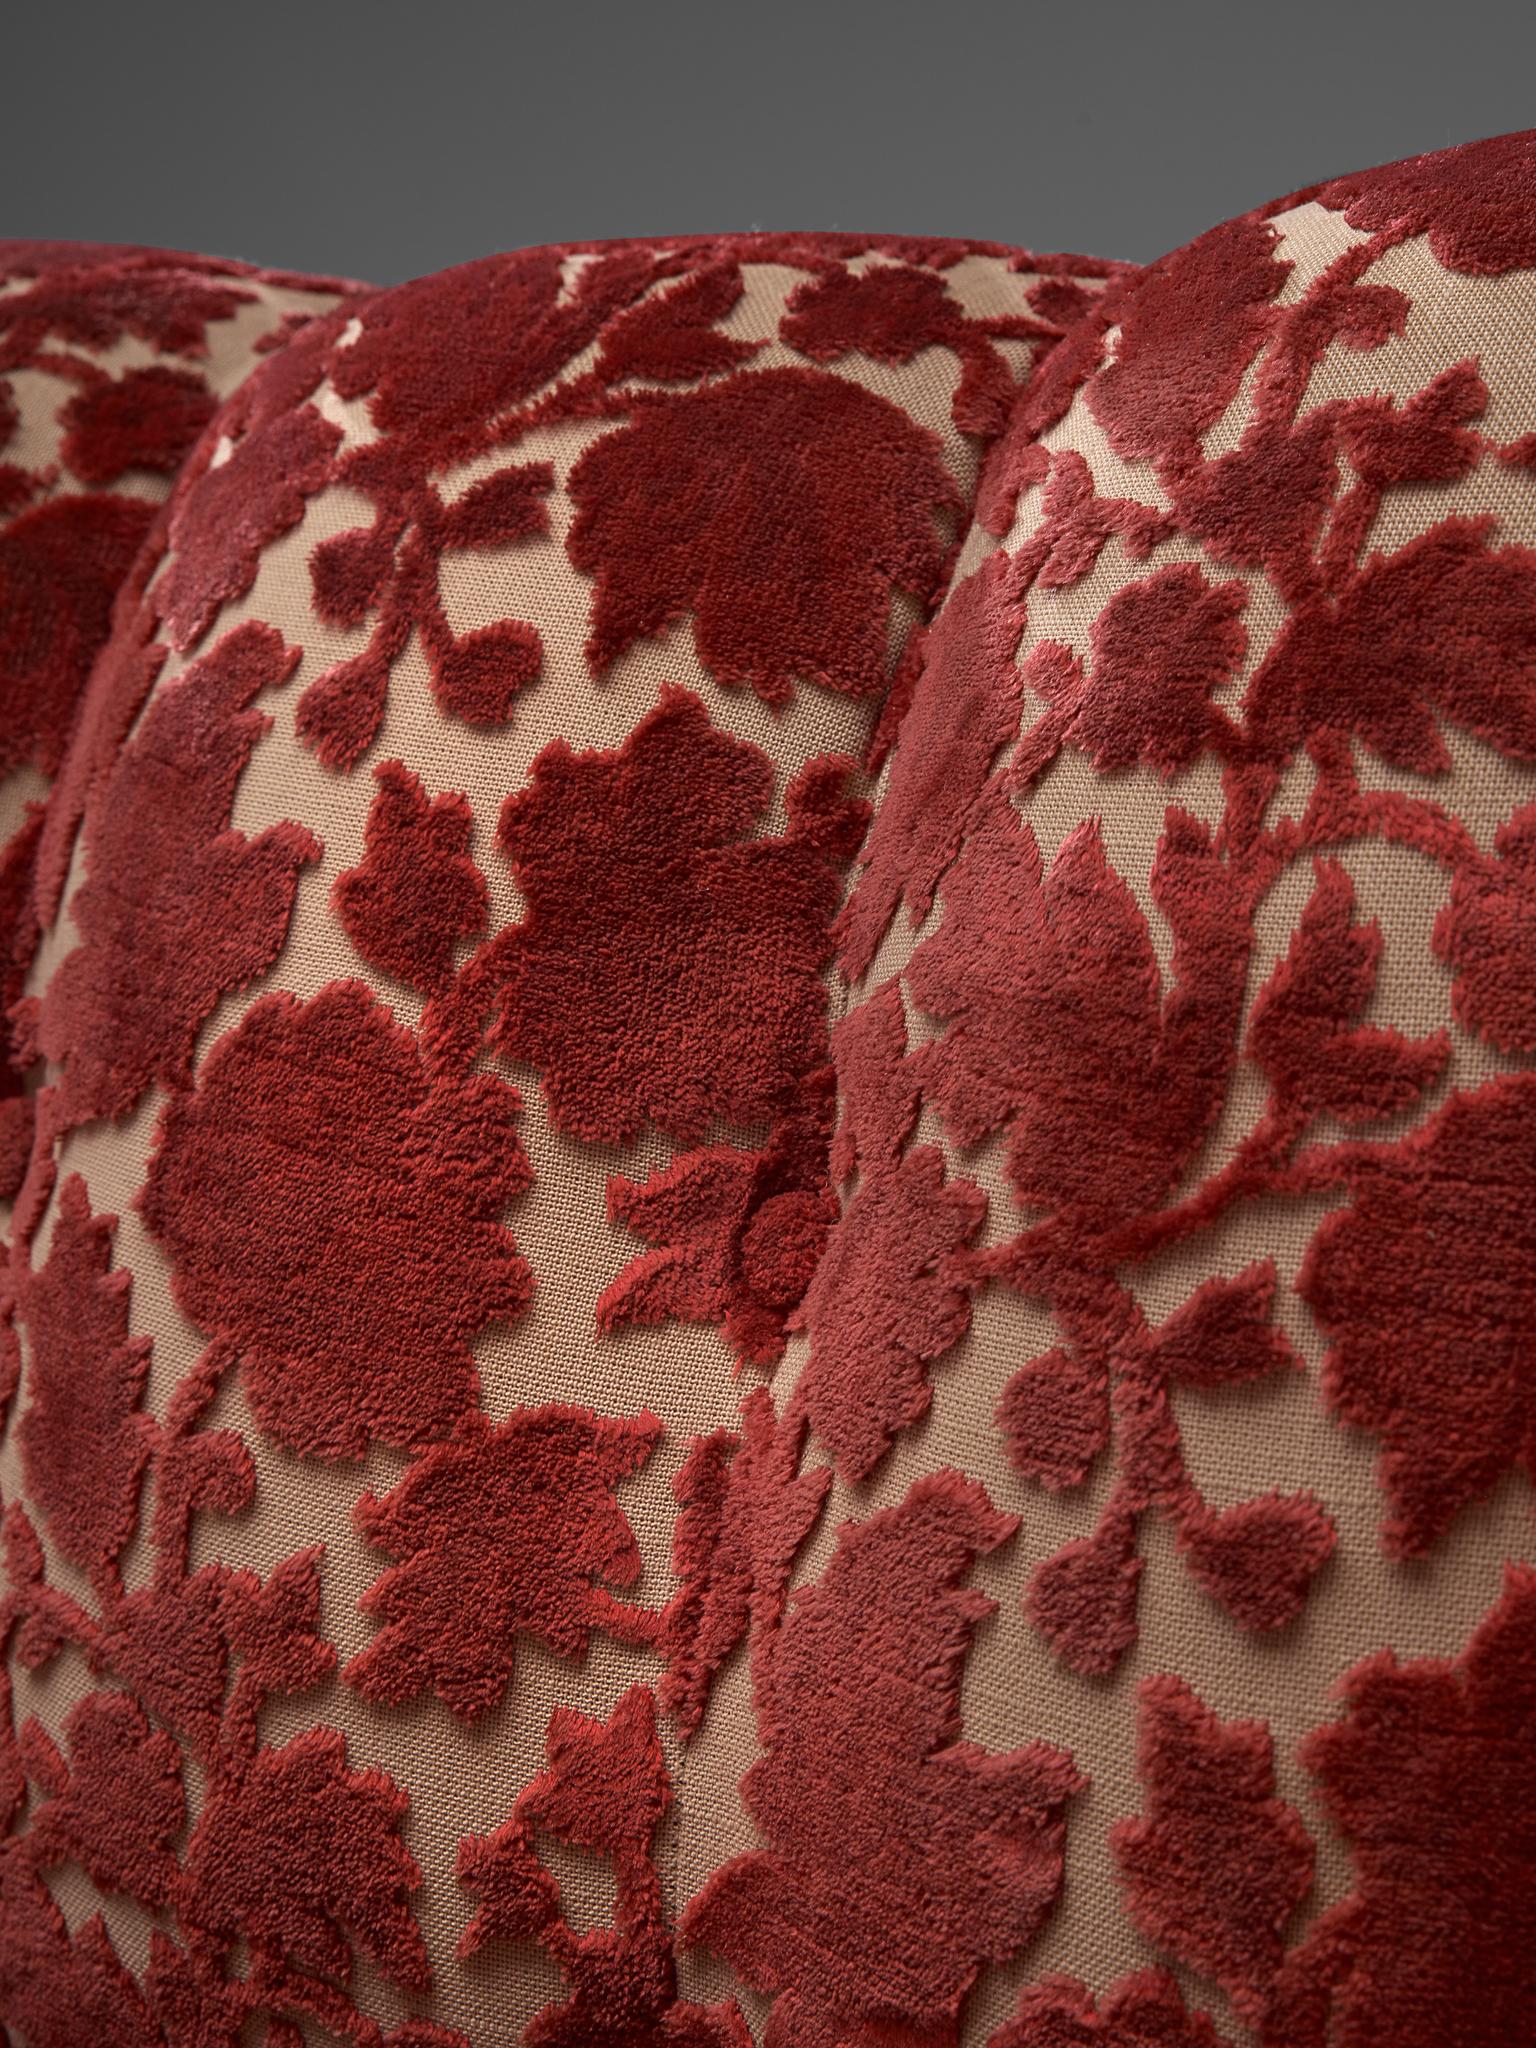 Elegant Italian Sofa in Red Floral Upholstery 2